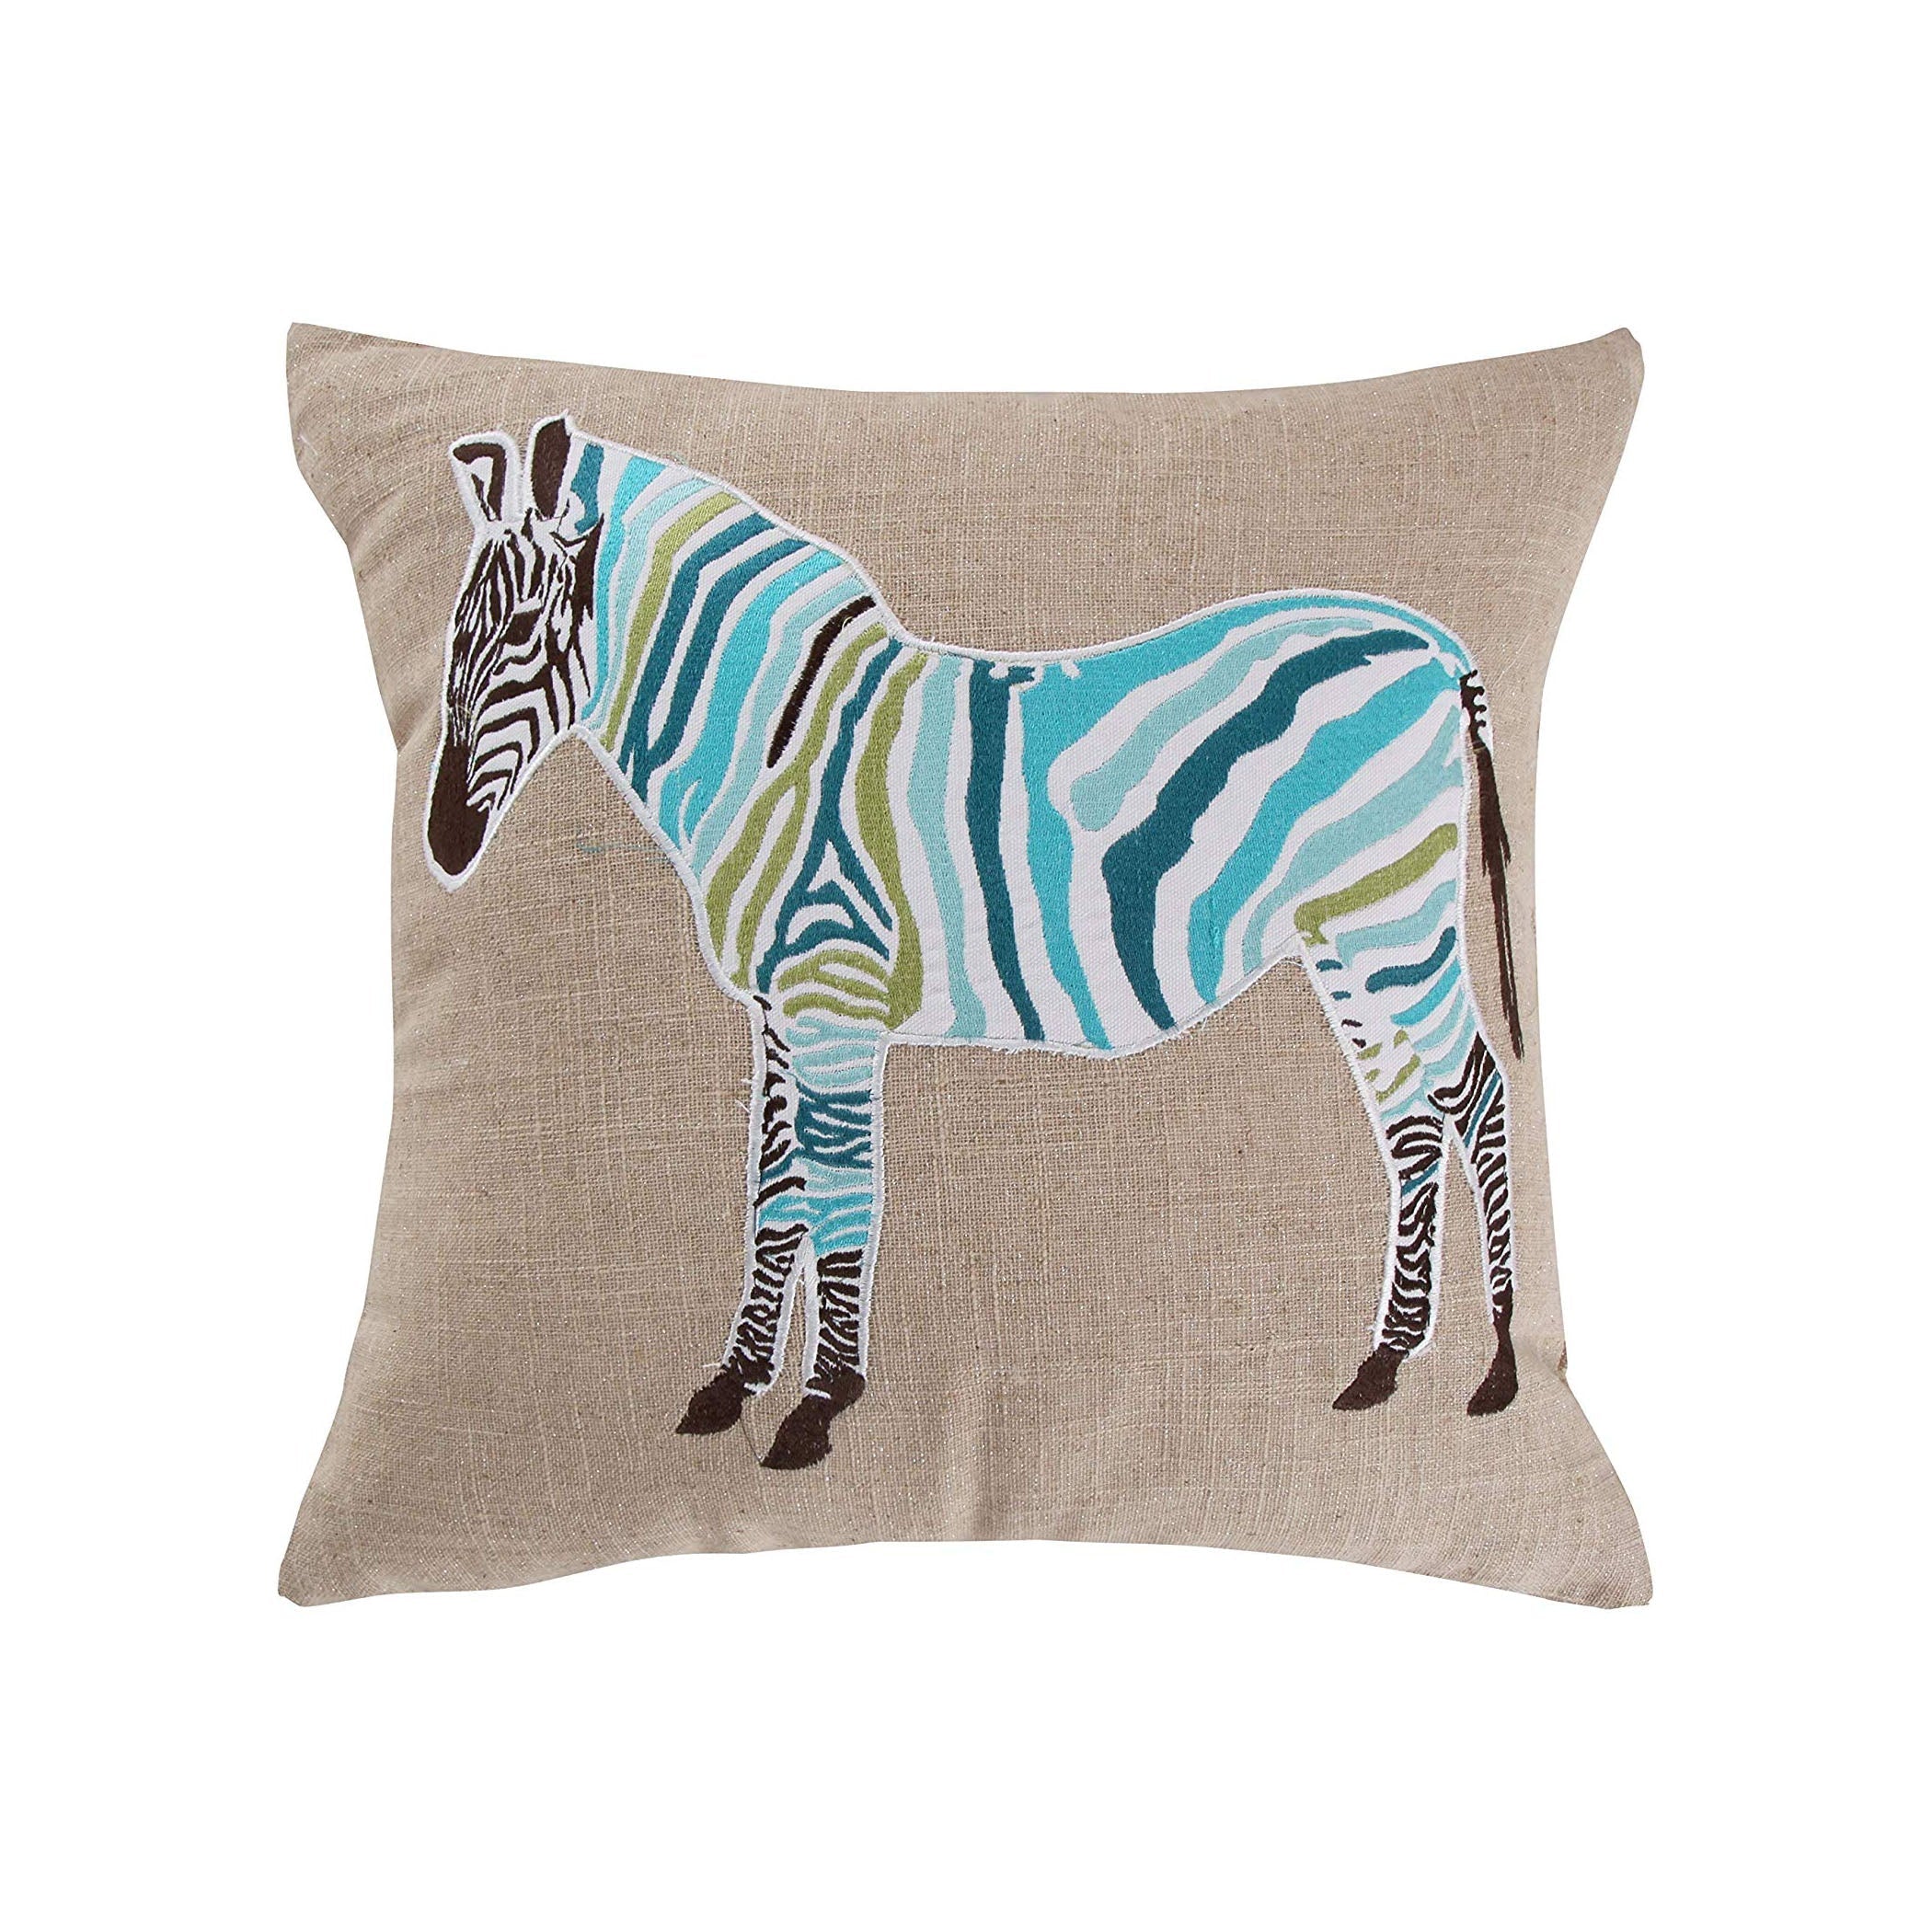 Mirage Teal Zebra Pillow